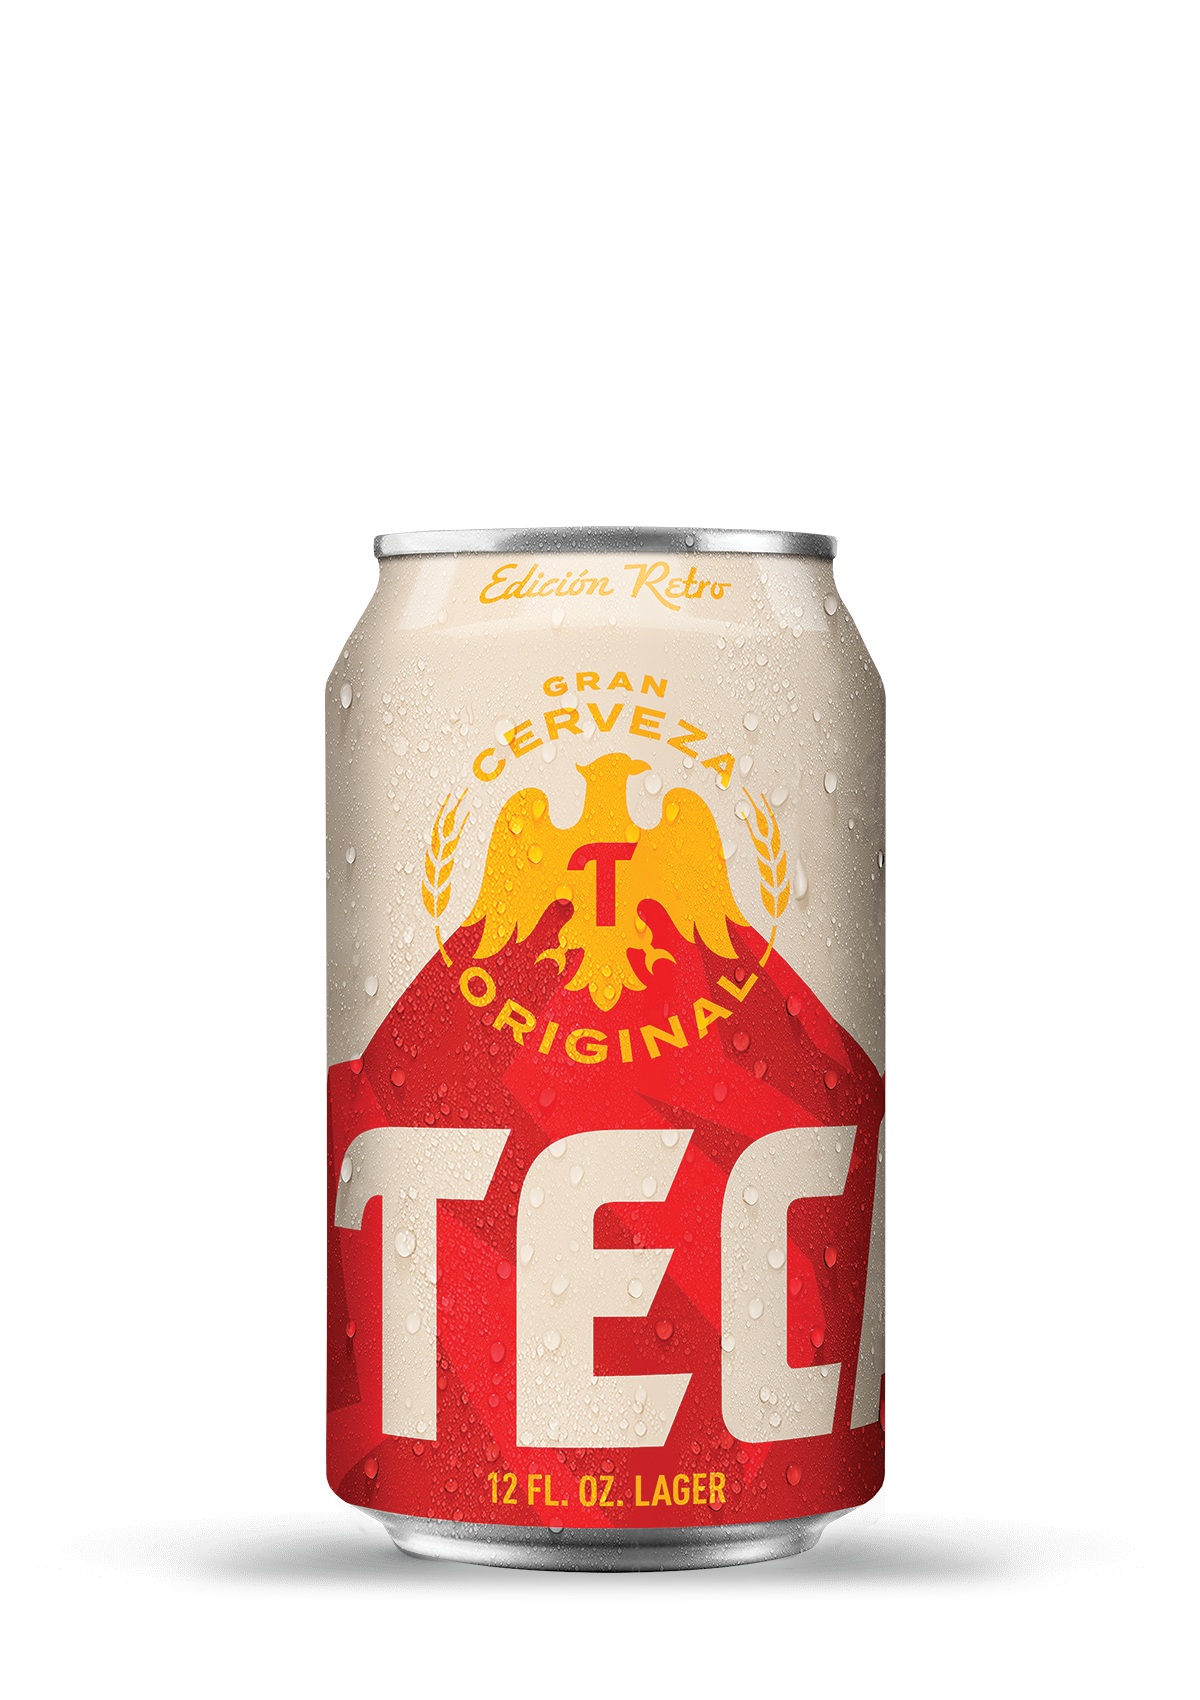 Tecate® Original 4.5% alc. vol. 12 oz red and silver can.